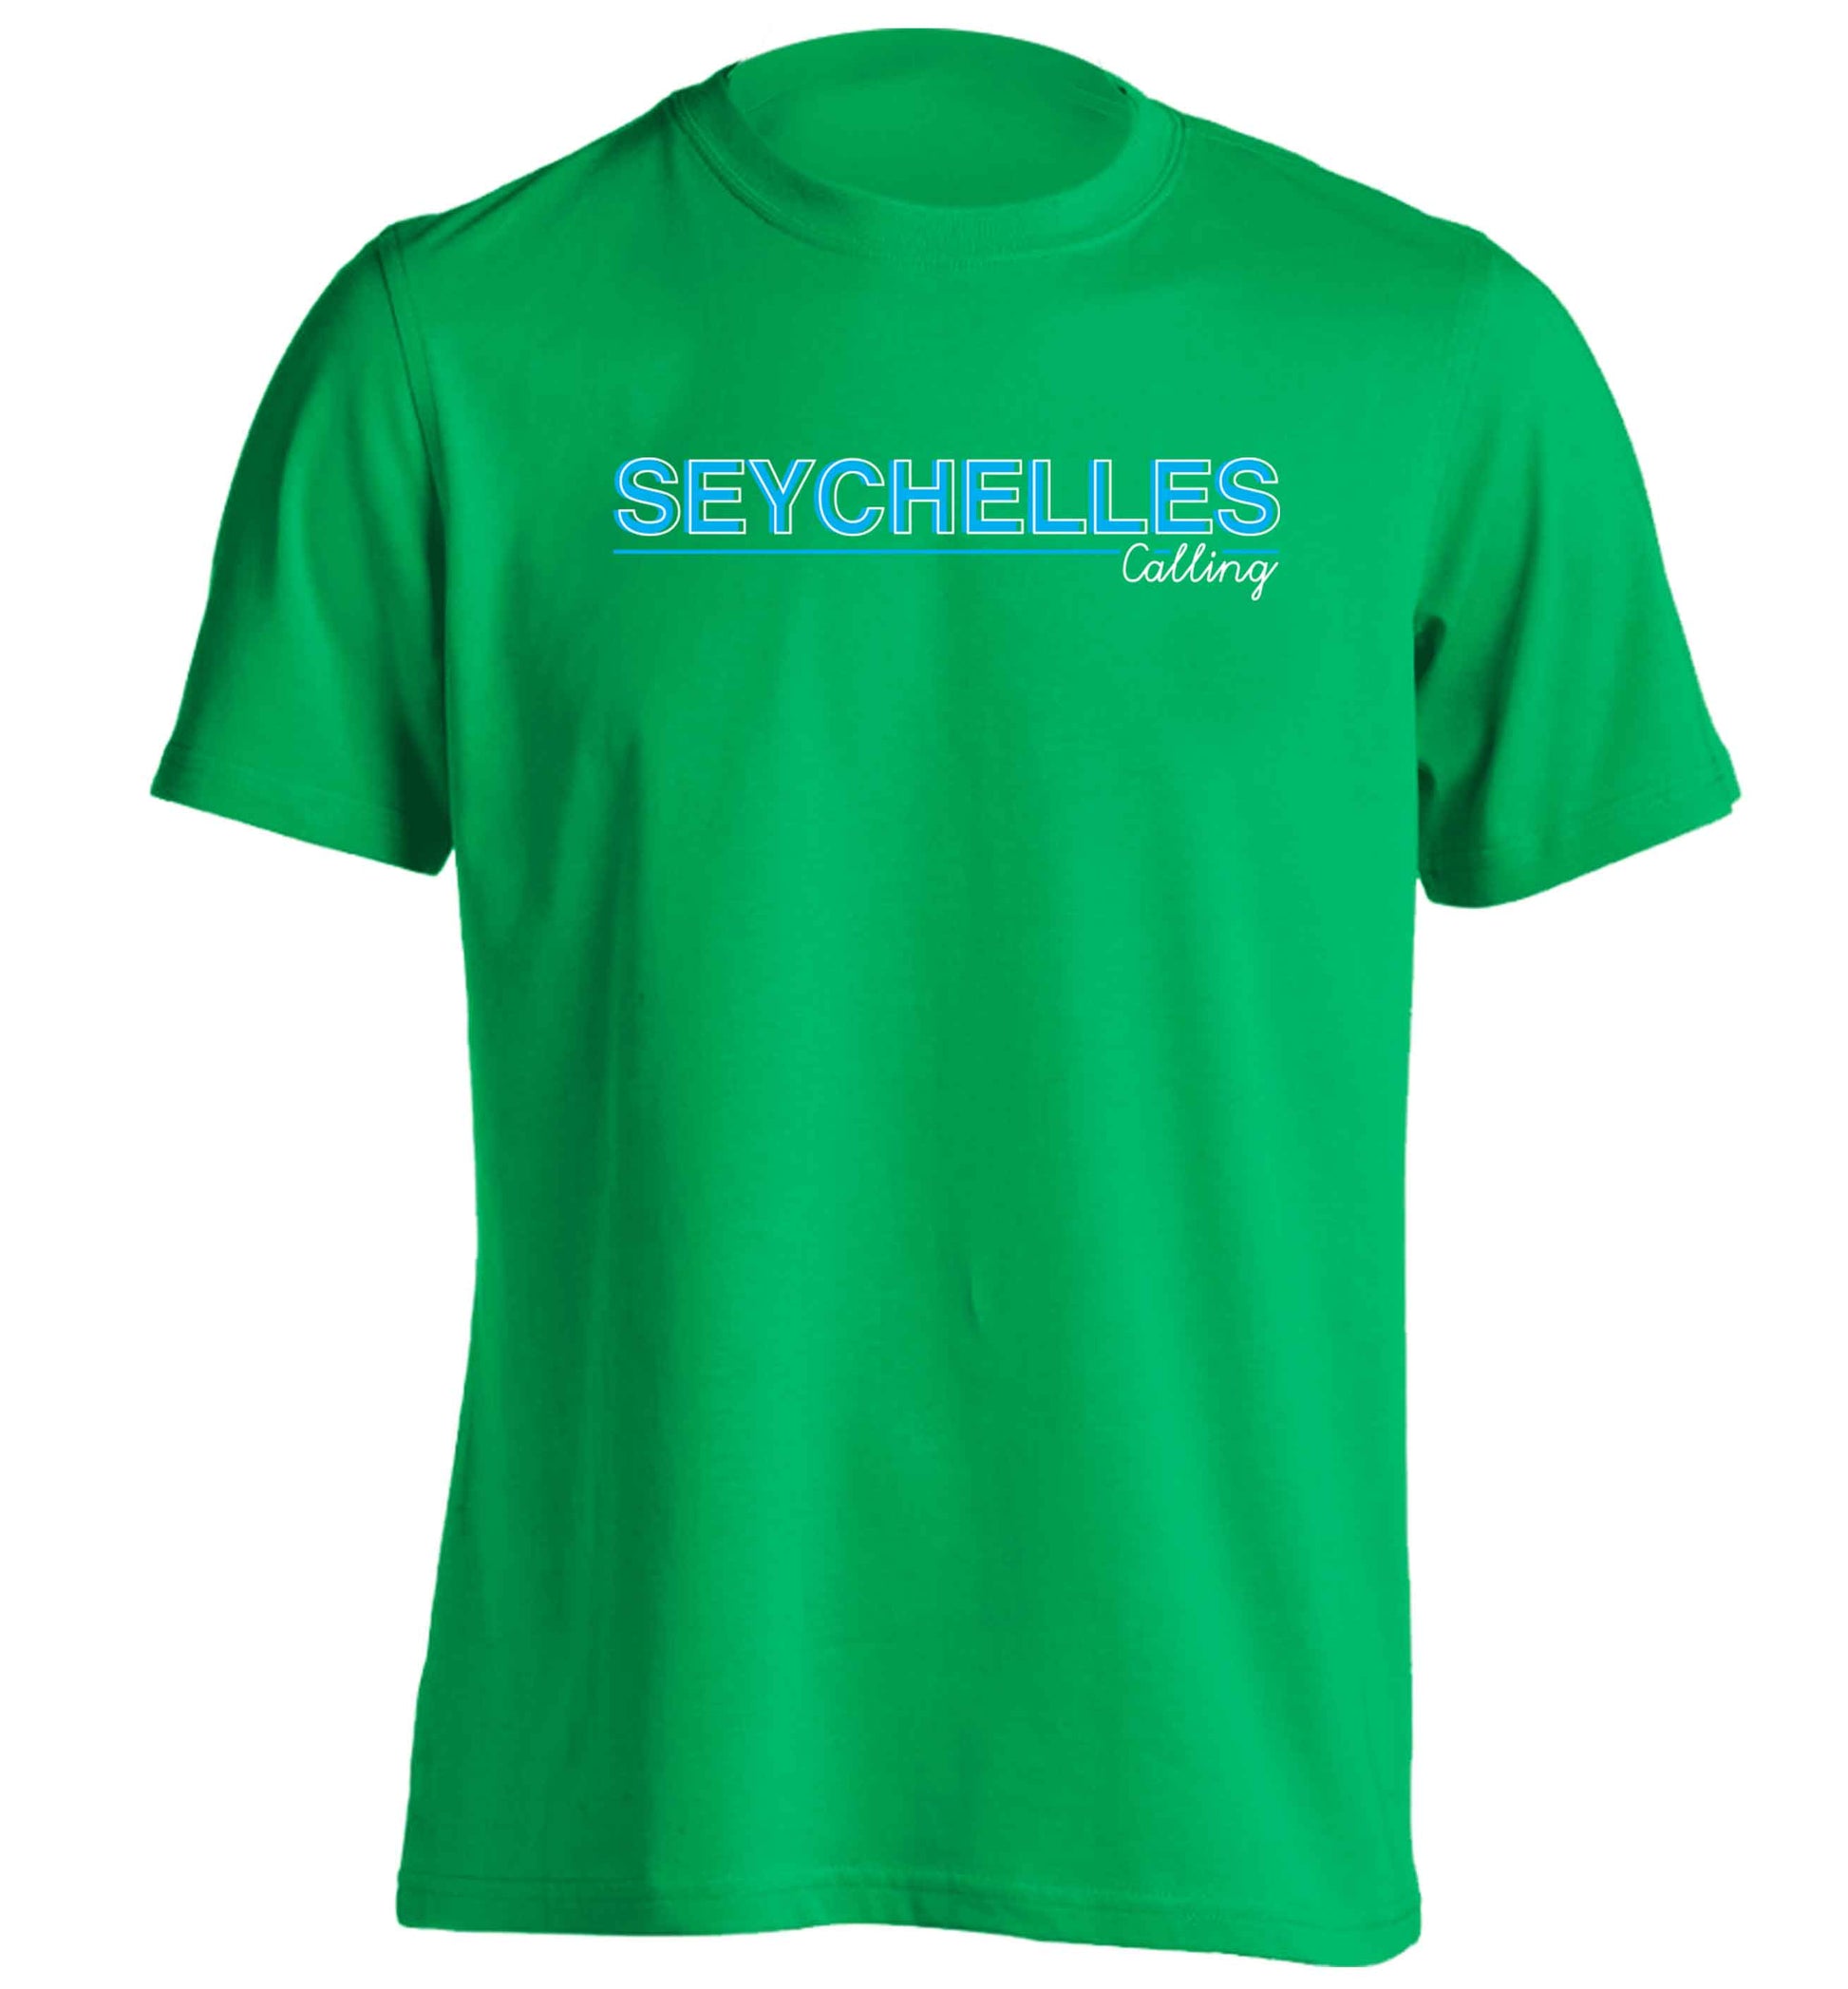 Seychelles calling adults unisex green Tshirt 2XL